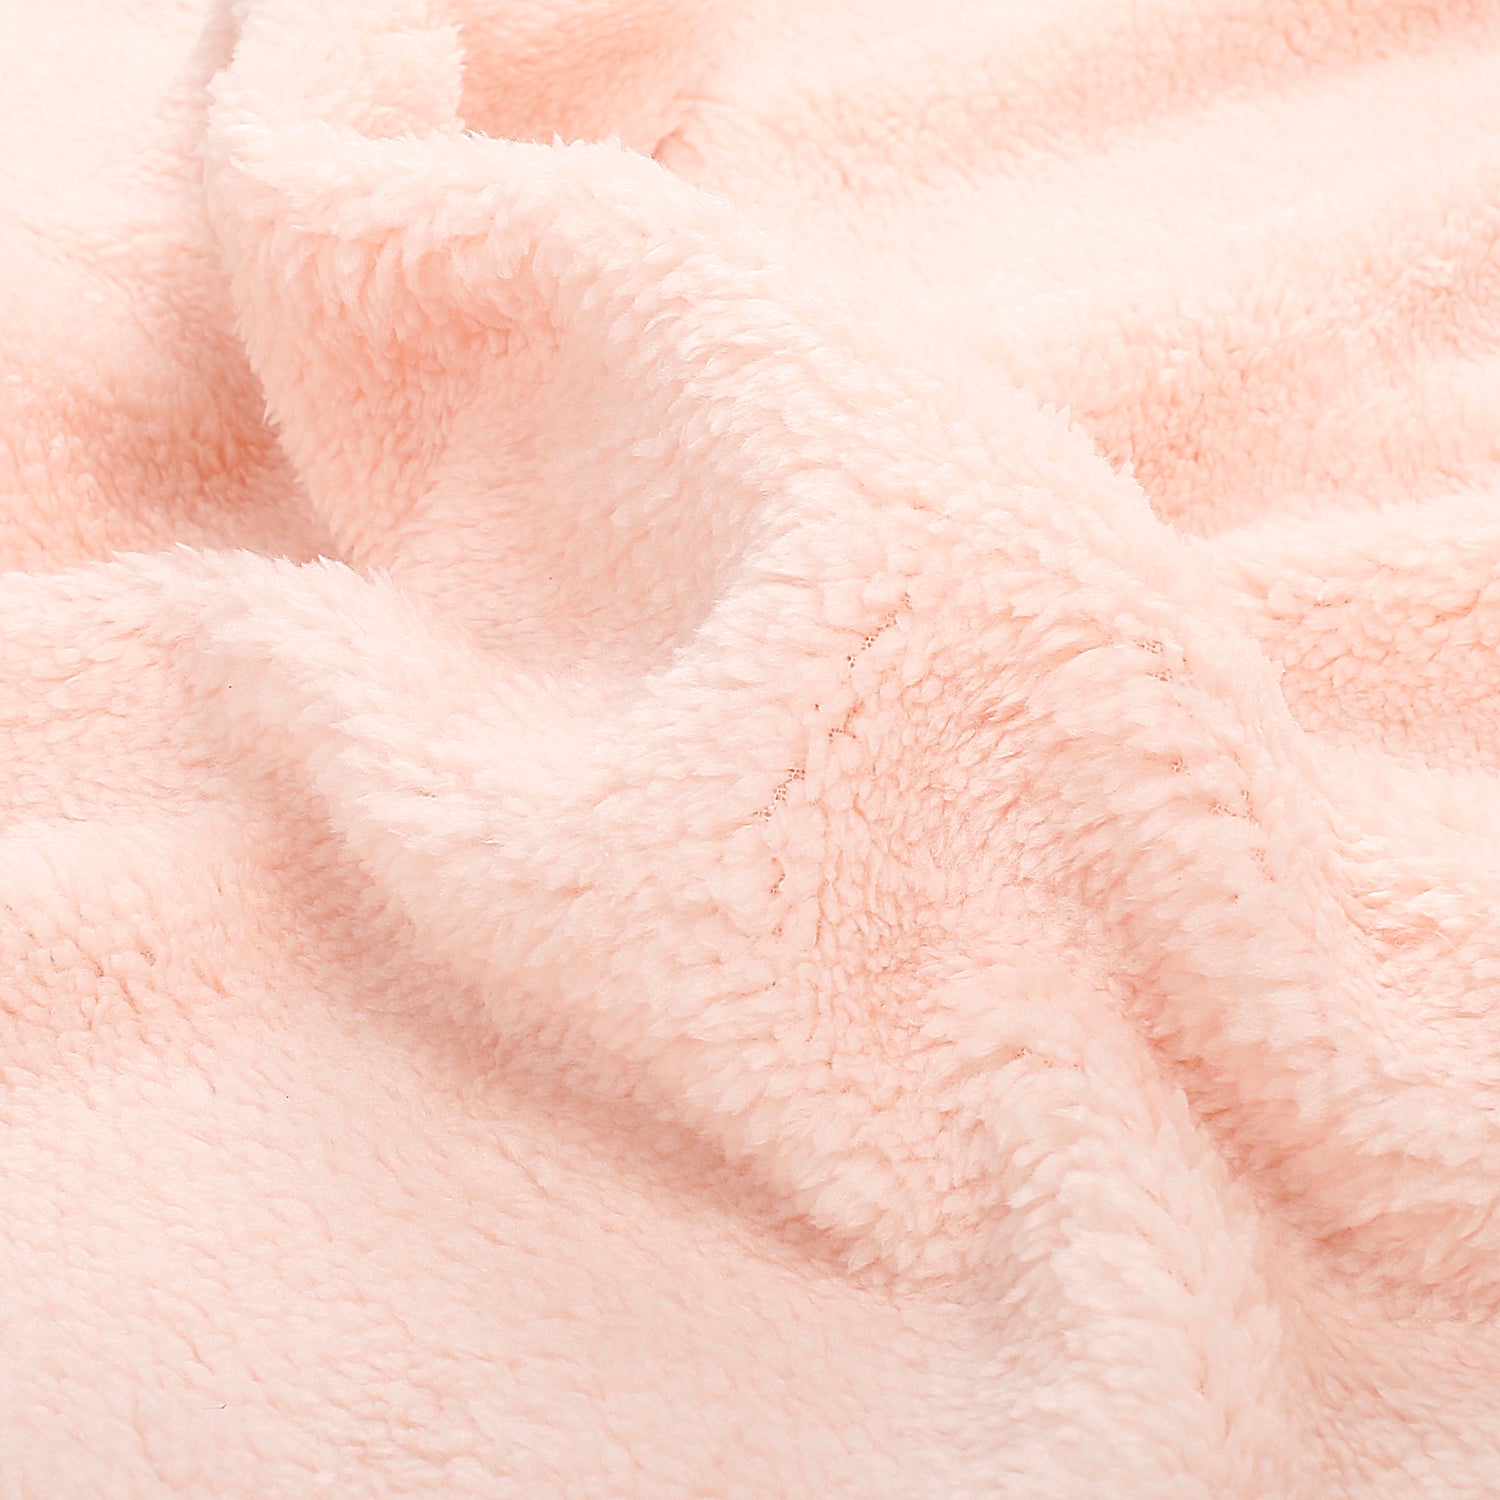 Night Owl Peach Blanket - Baby Moo